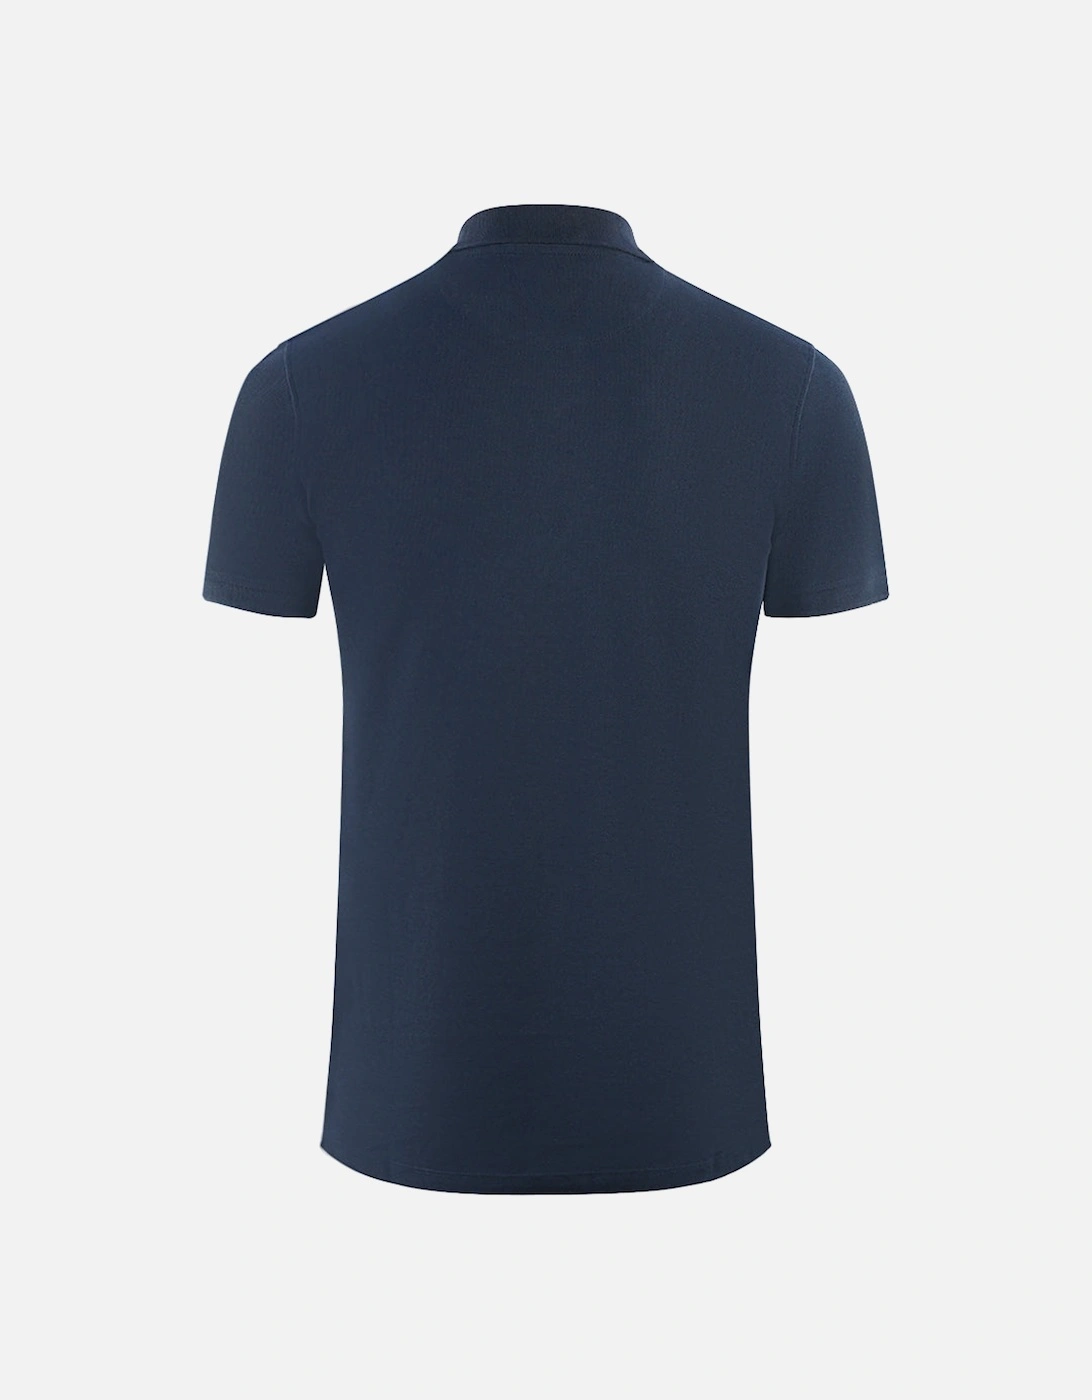 London Crest Navy Blue Polo Shirt